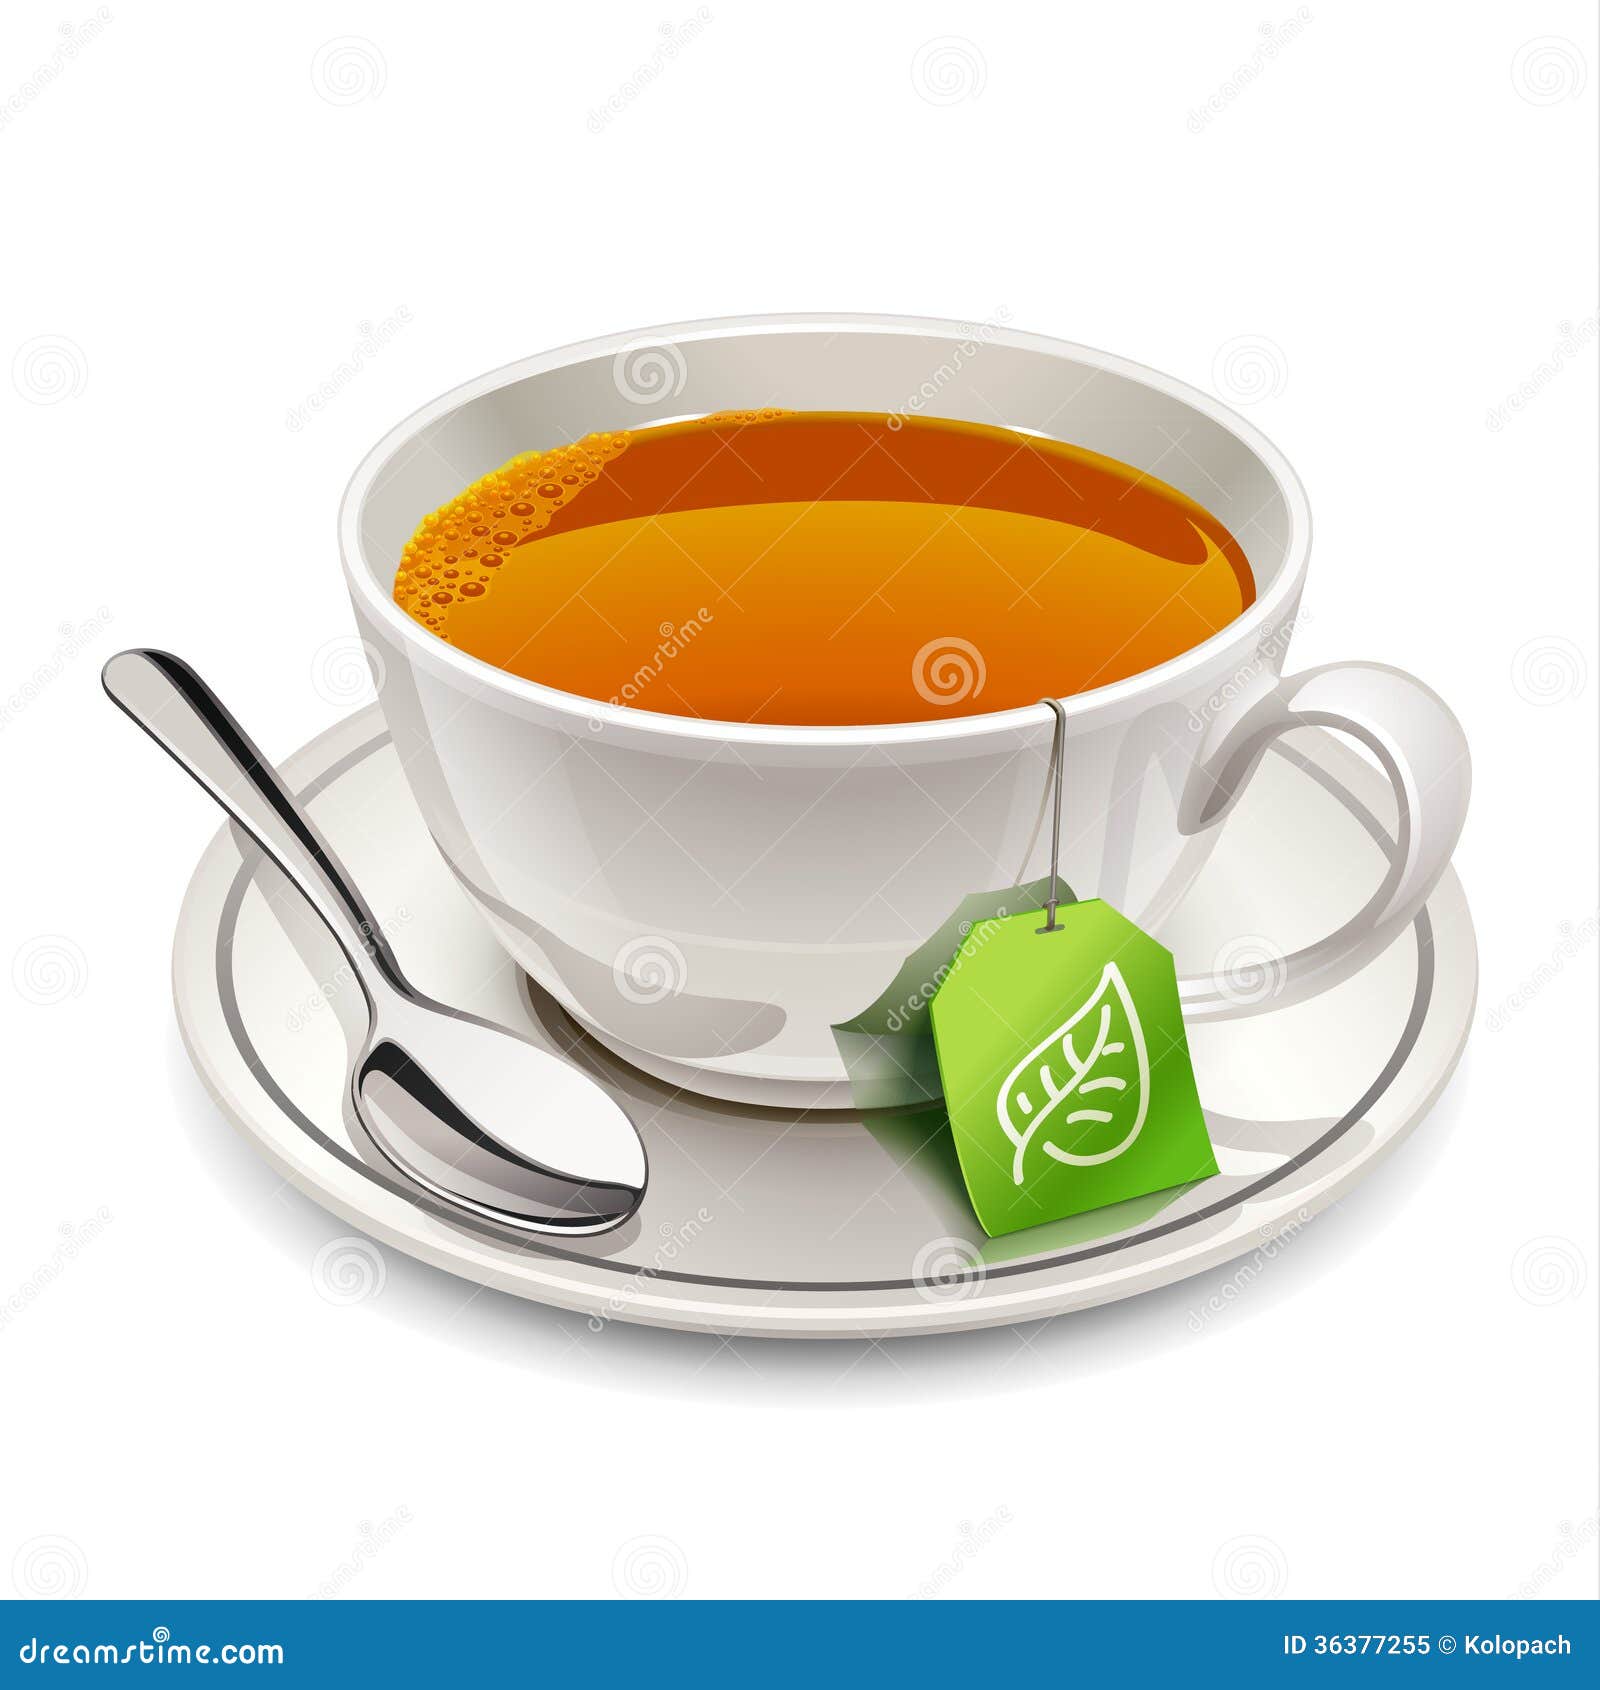 cup of tea with tea bag